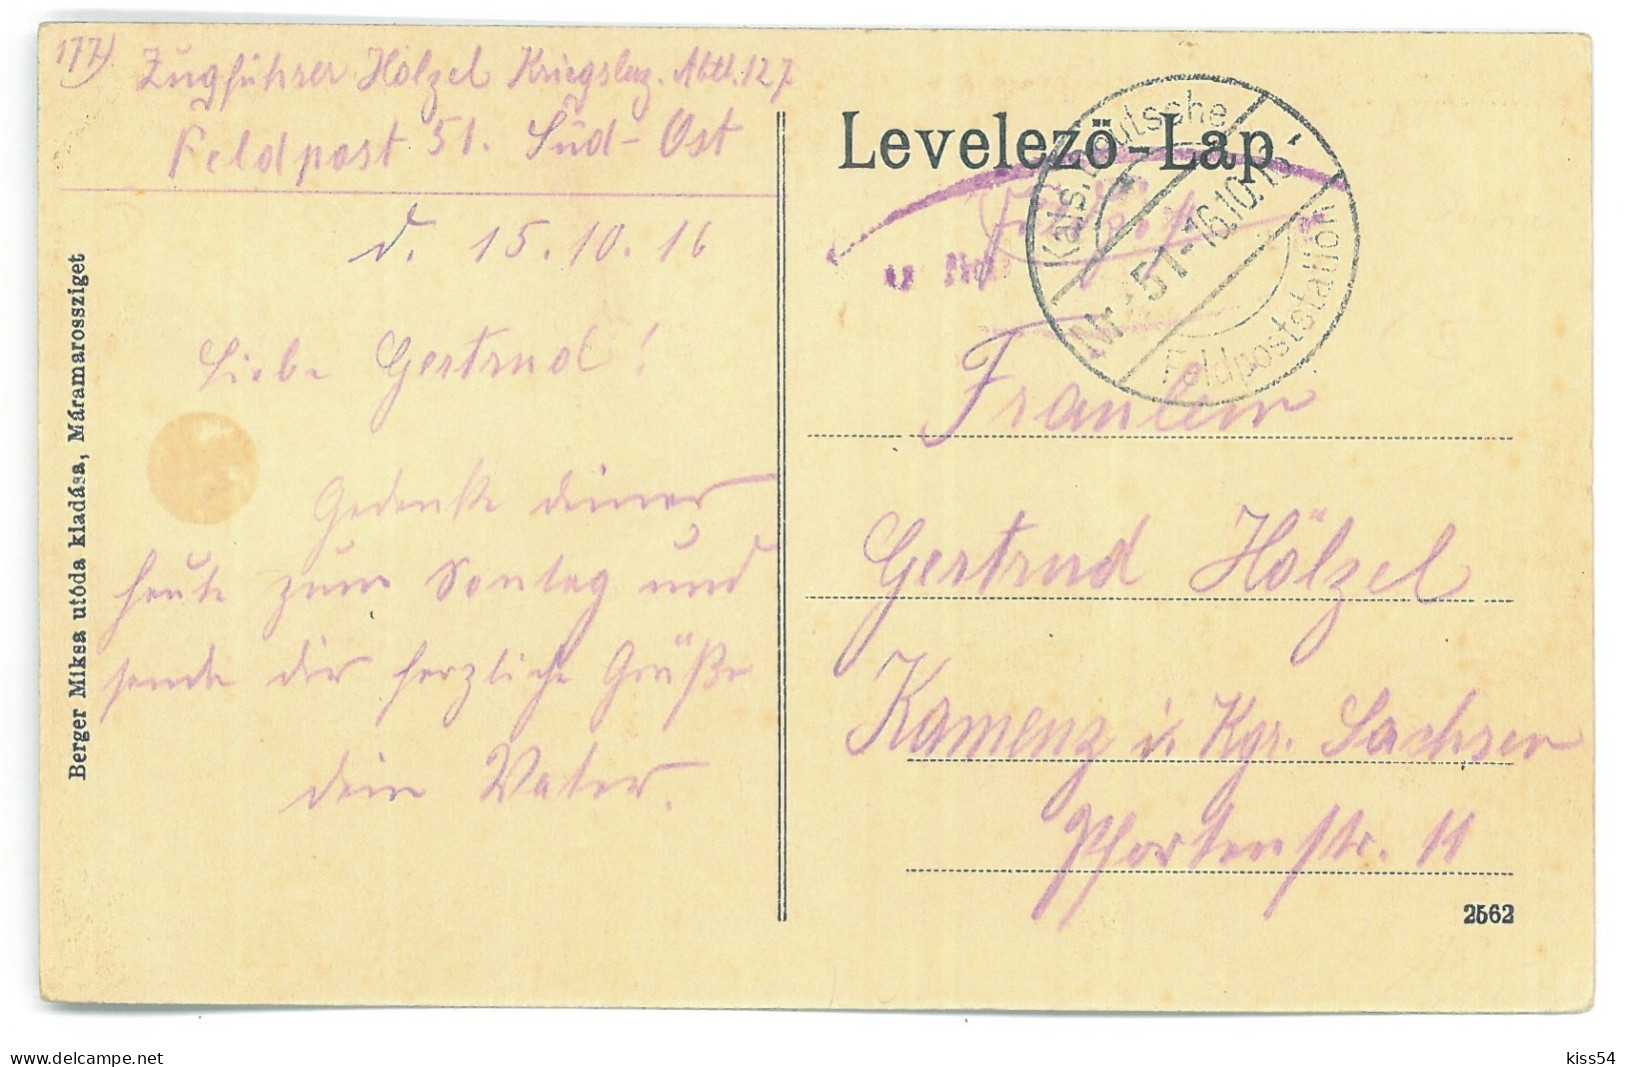 RO 09 - 25143 OCNA SUGATAG, Maramures, Market, Romania - Old Postcard, CENSOR - Used - 1916 - Roumanie